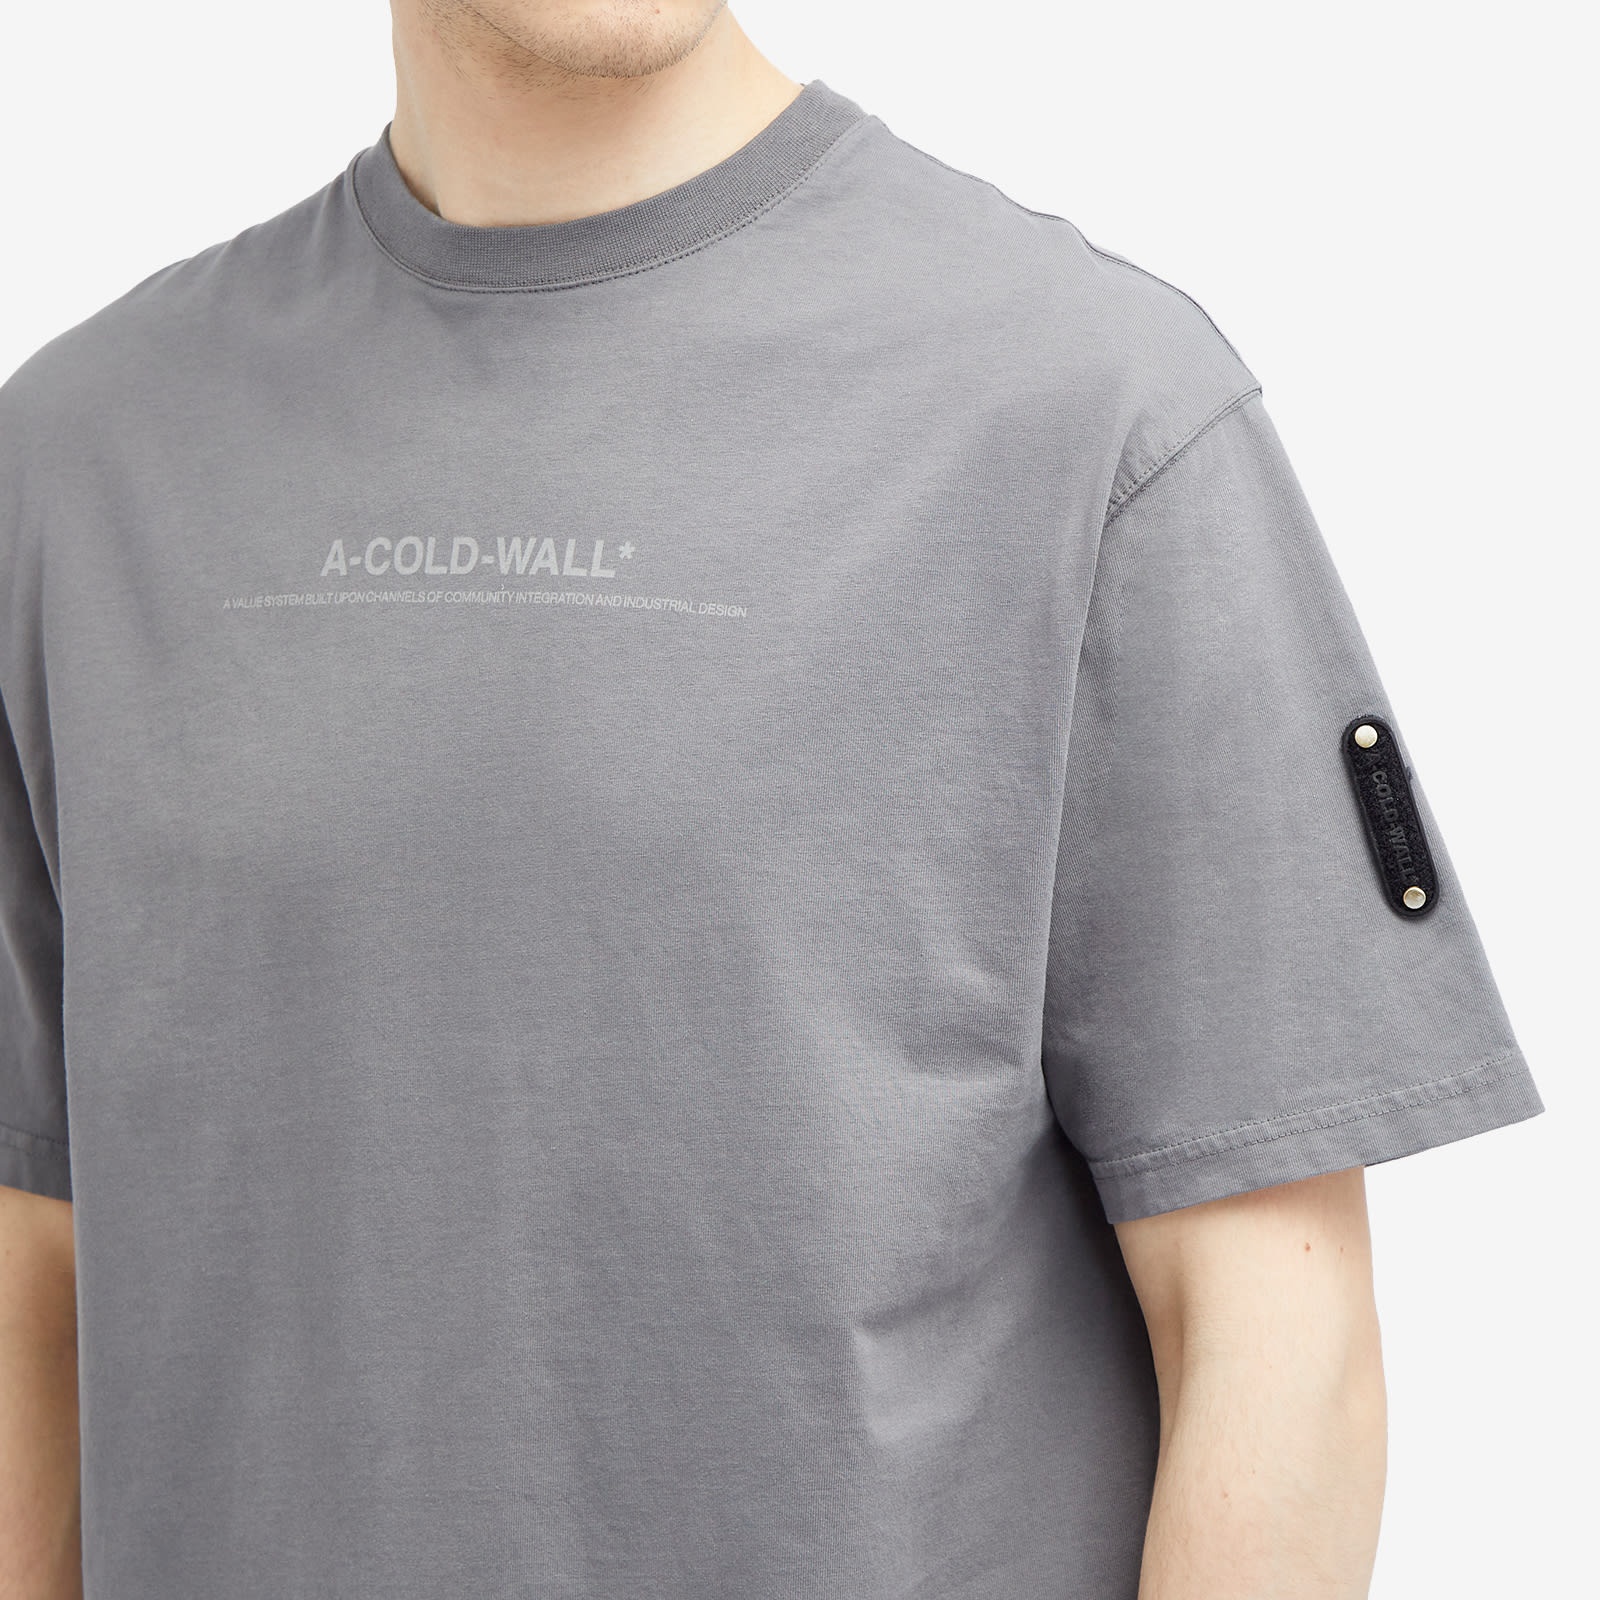 A-COLD-WALL* Discourse T-Shirt - 5